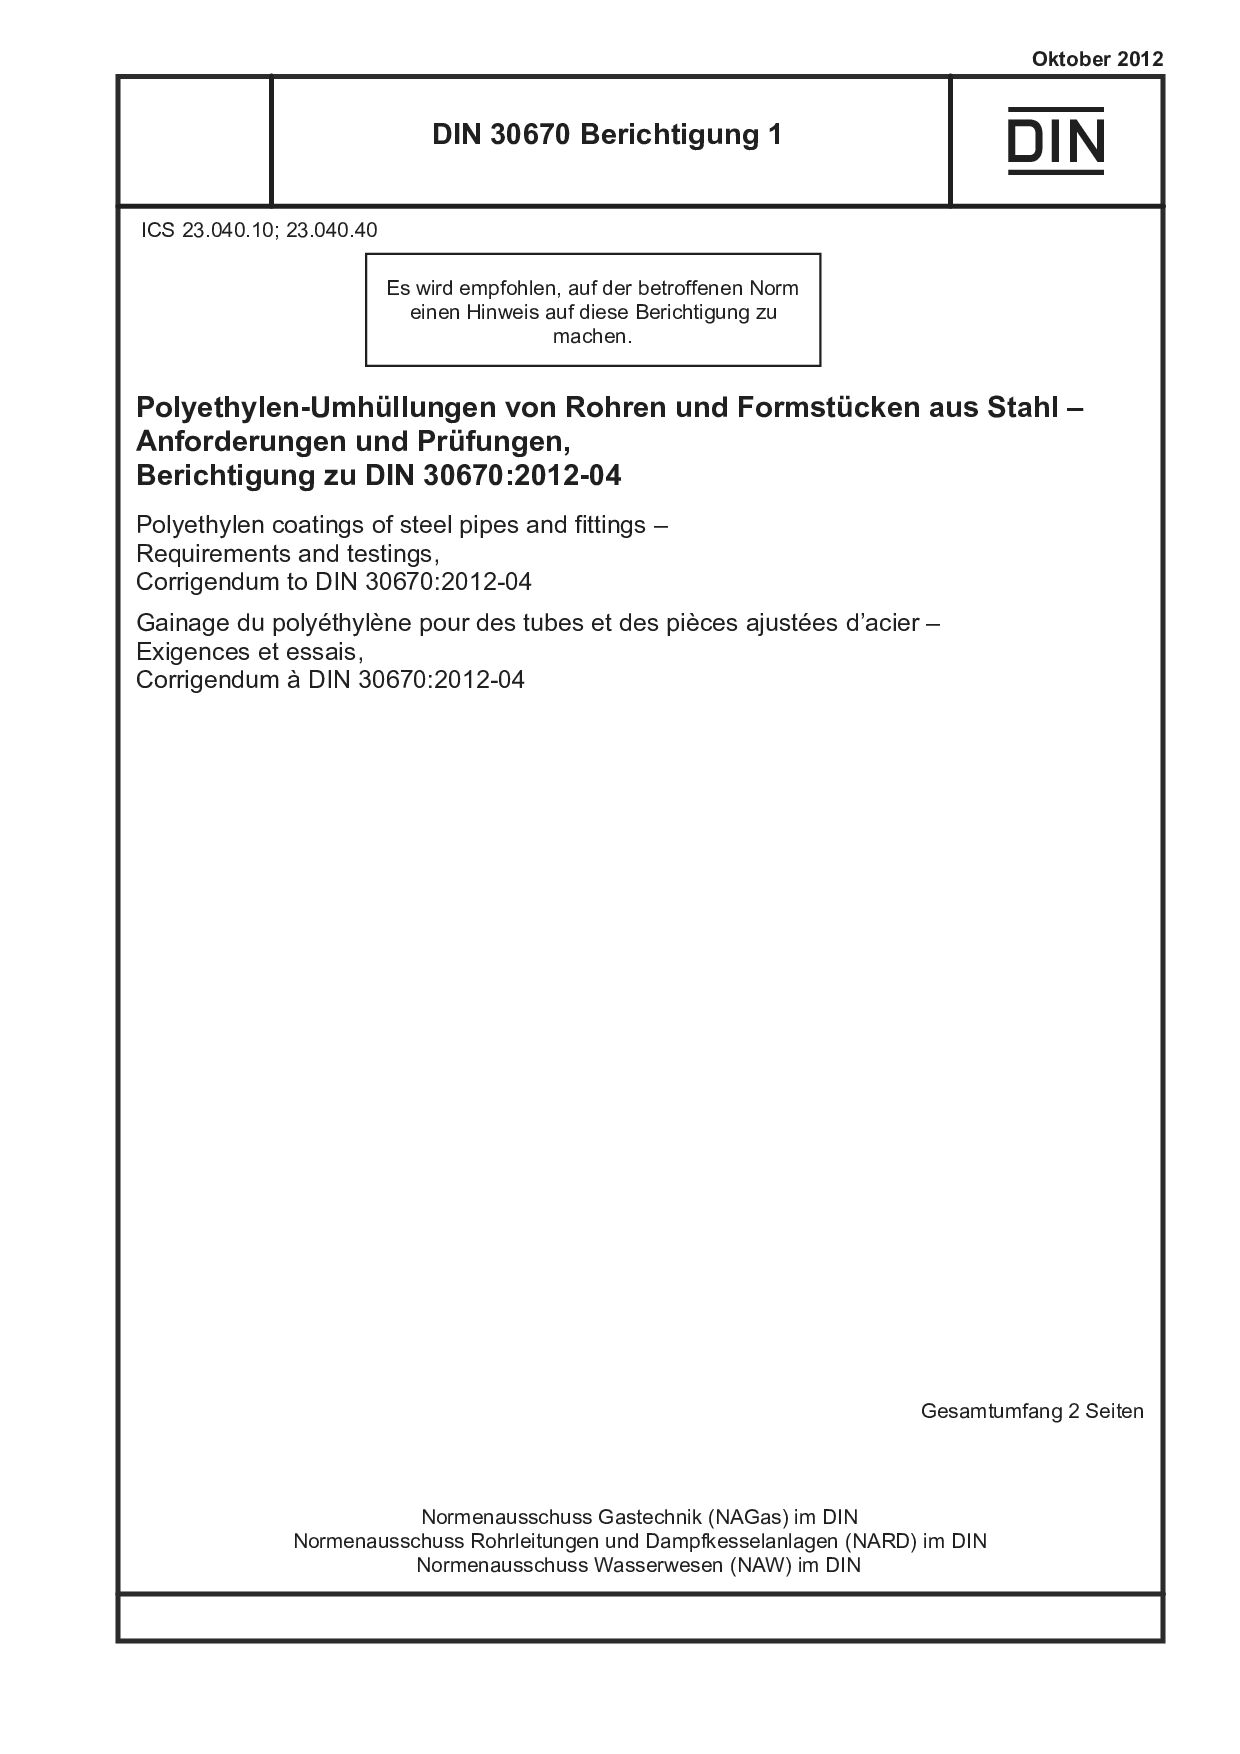 DIN 30670 Berichtigung 1:2012-10封面图